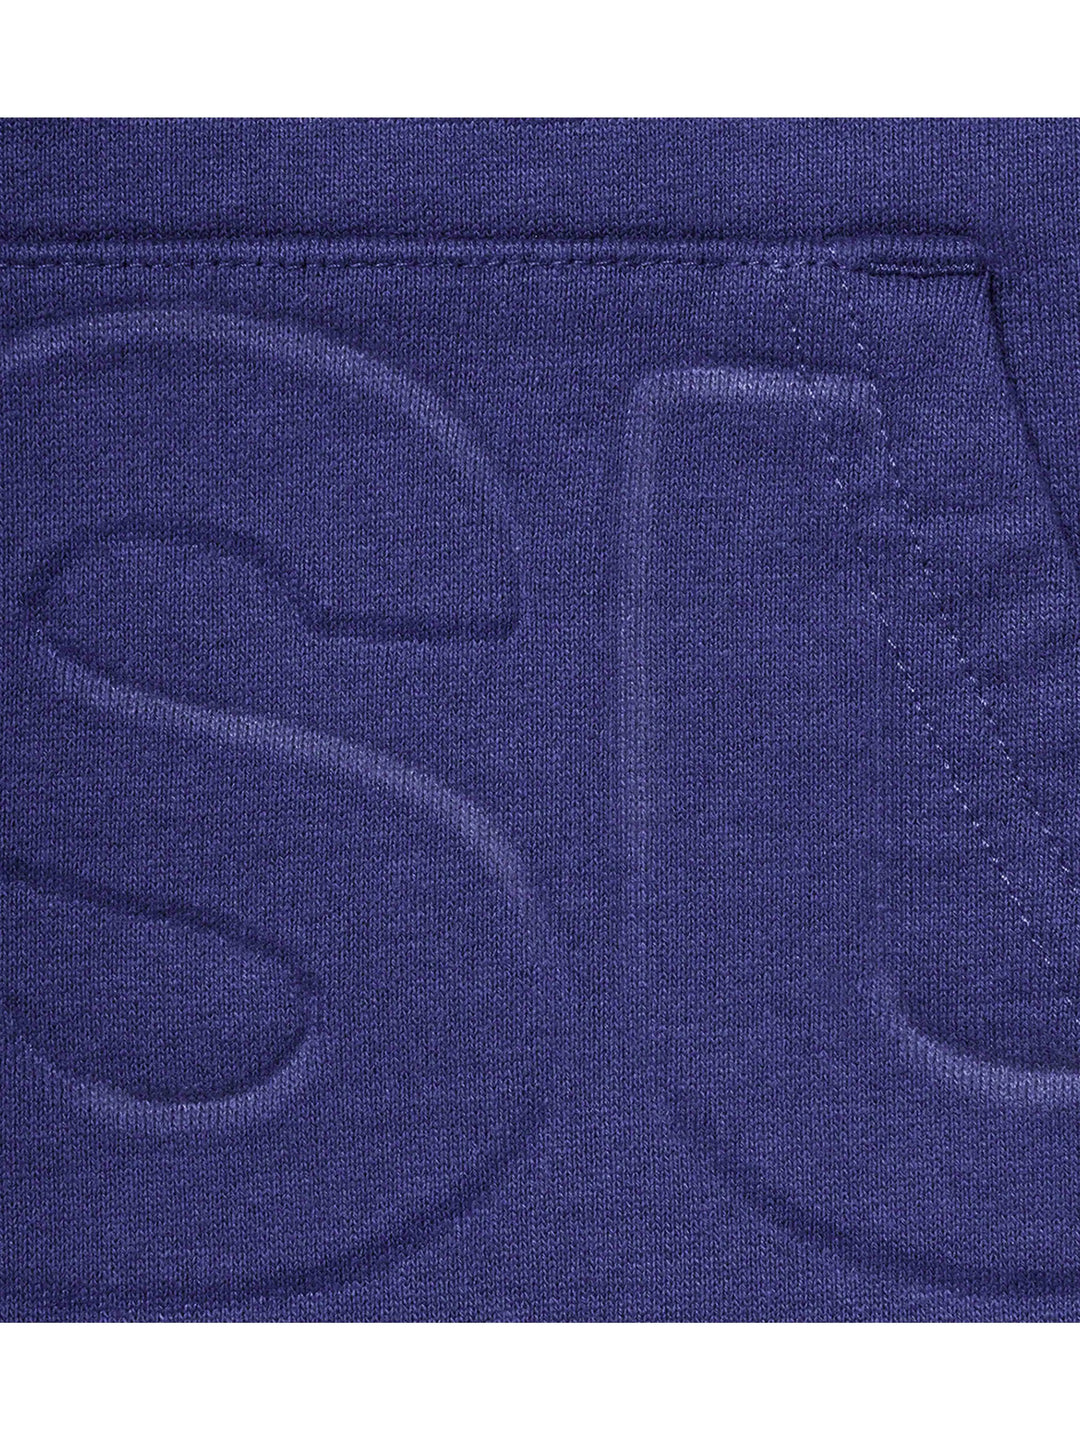 Supreme Embossed Logos Hoodie Washed Navy [SS21] Prior